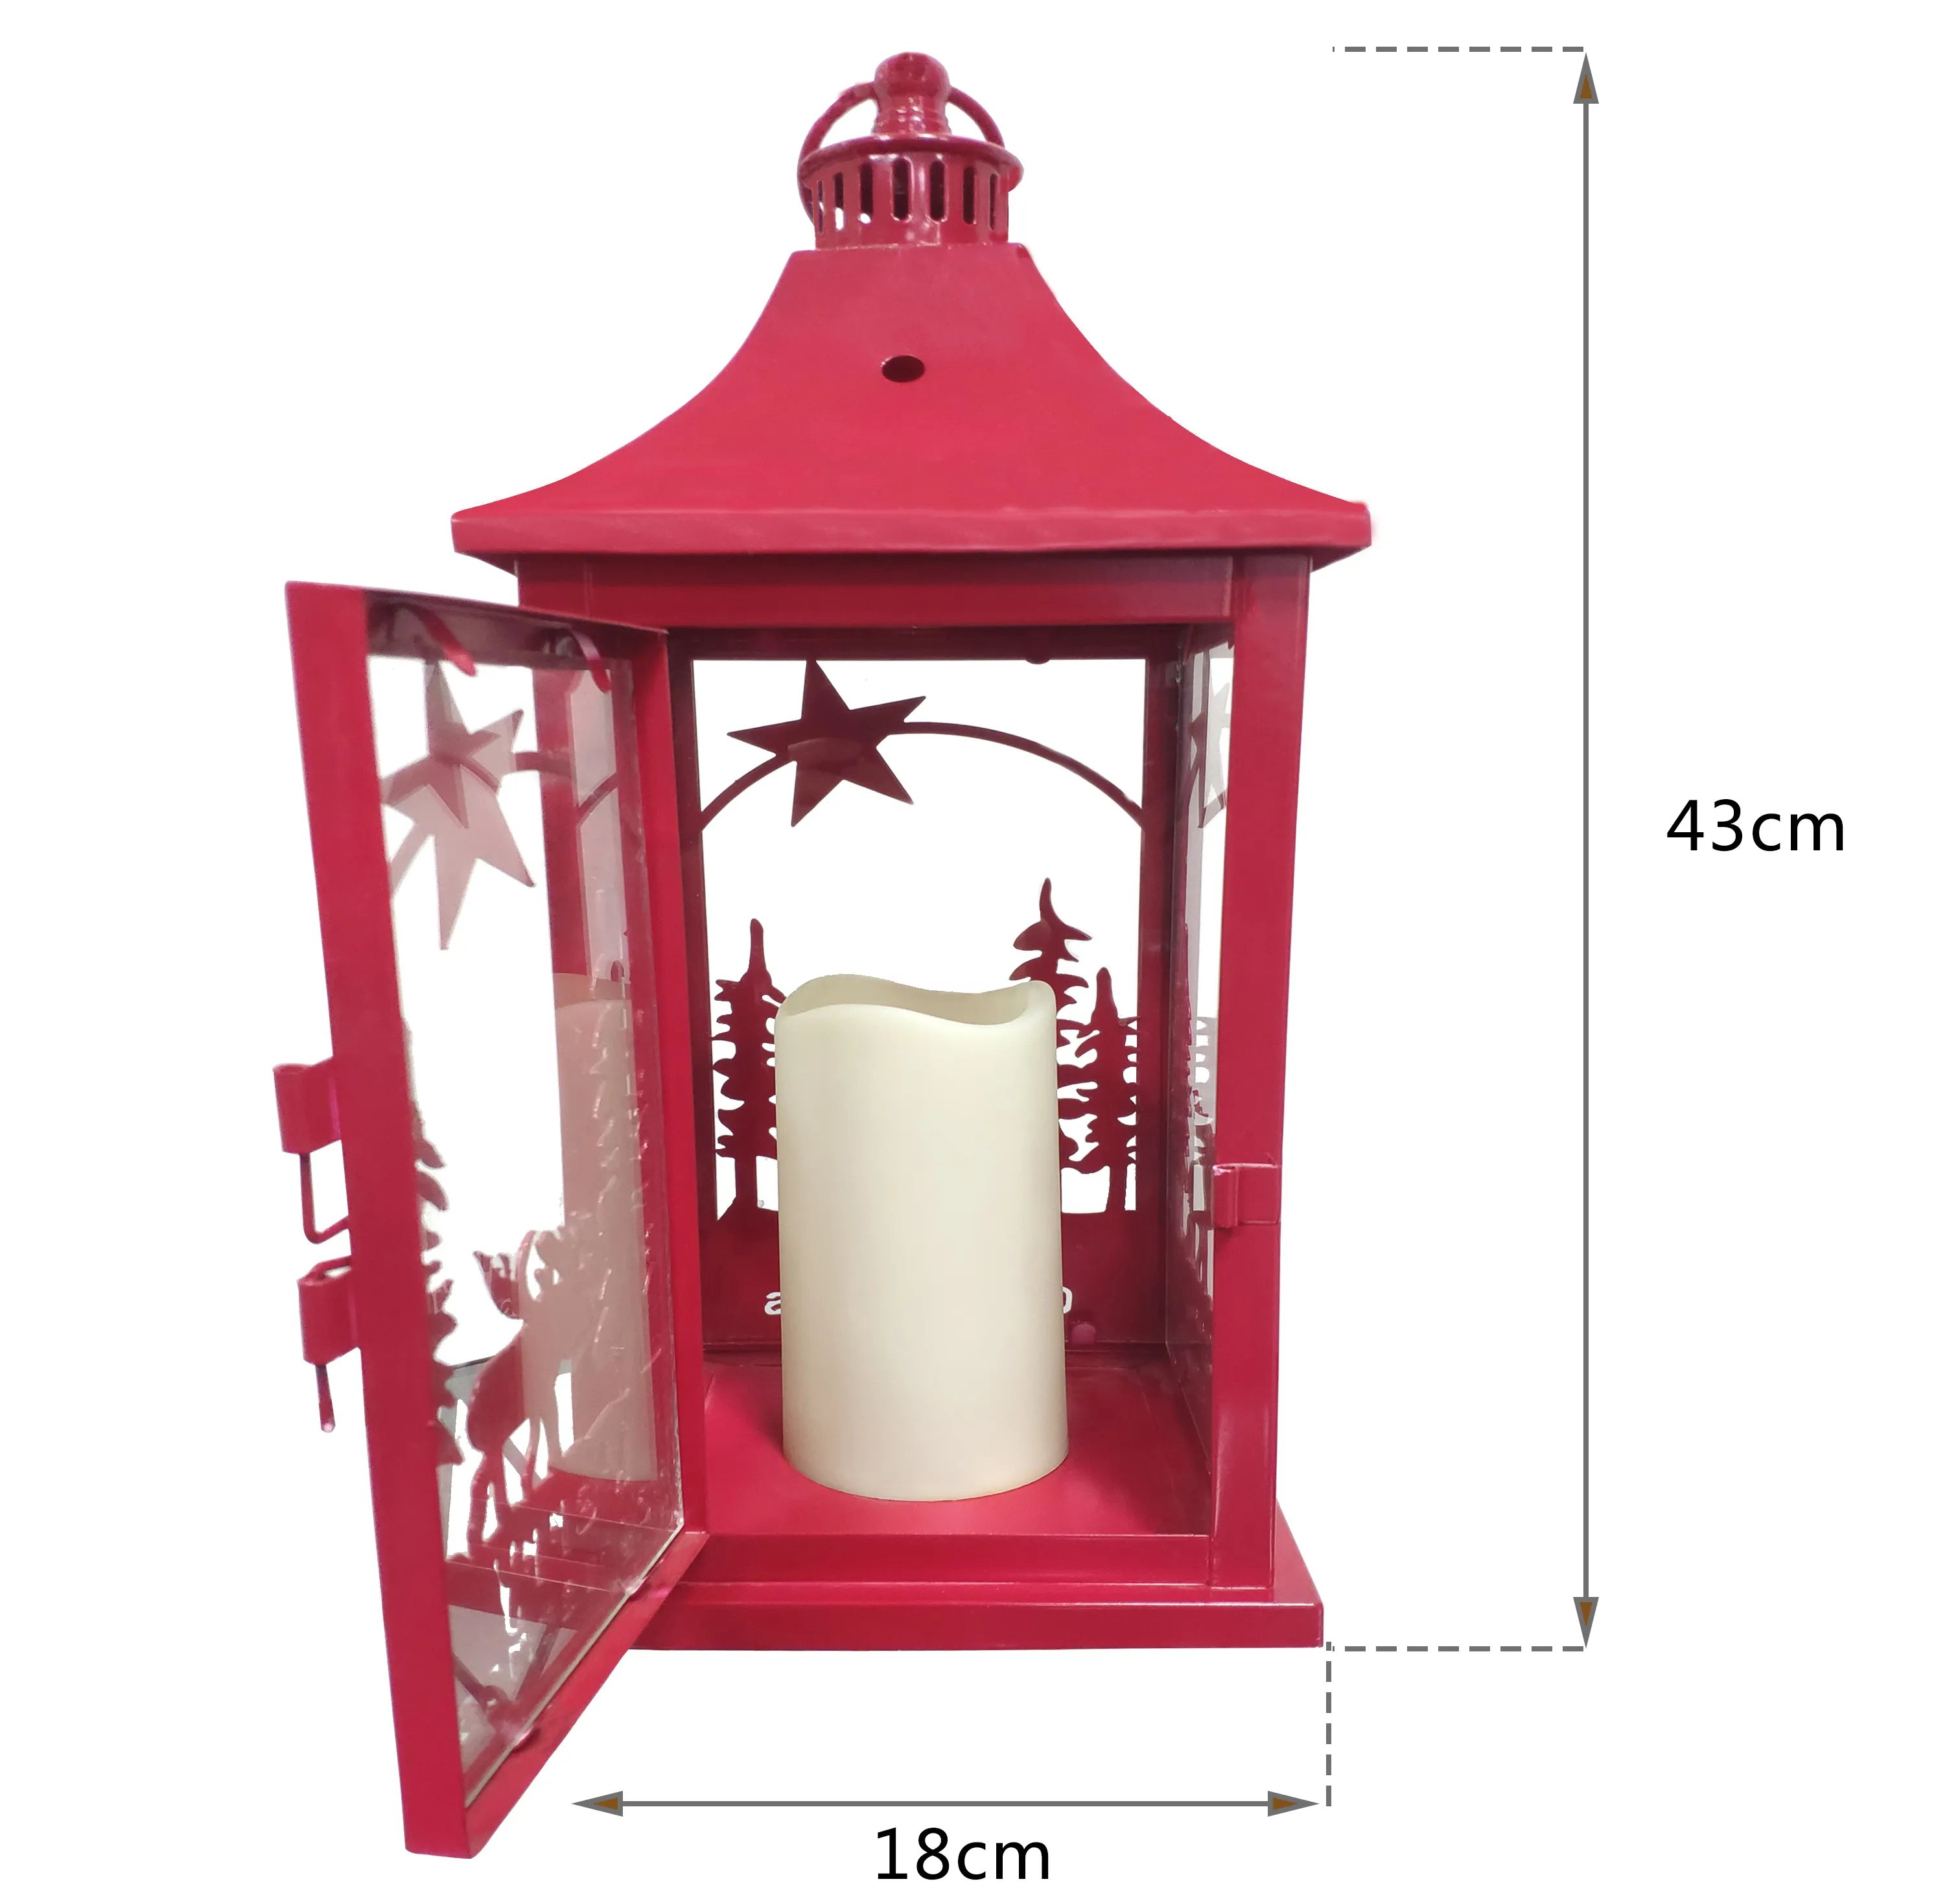 2021 Pavilion shaped metal hollow out frame led light candle lantern holder Christmas hanging decorative lanterns